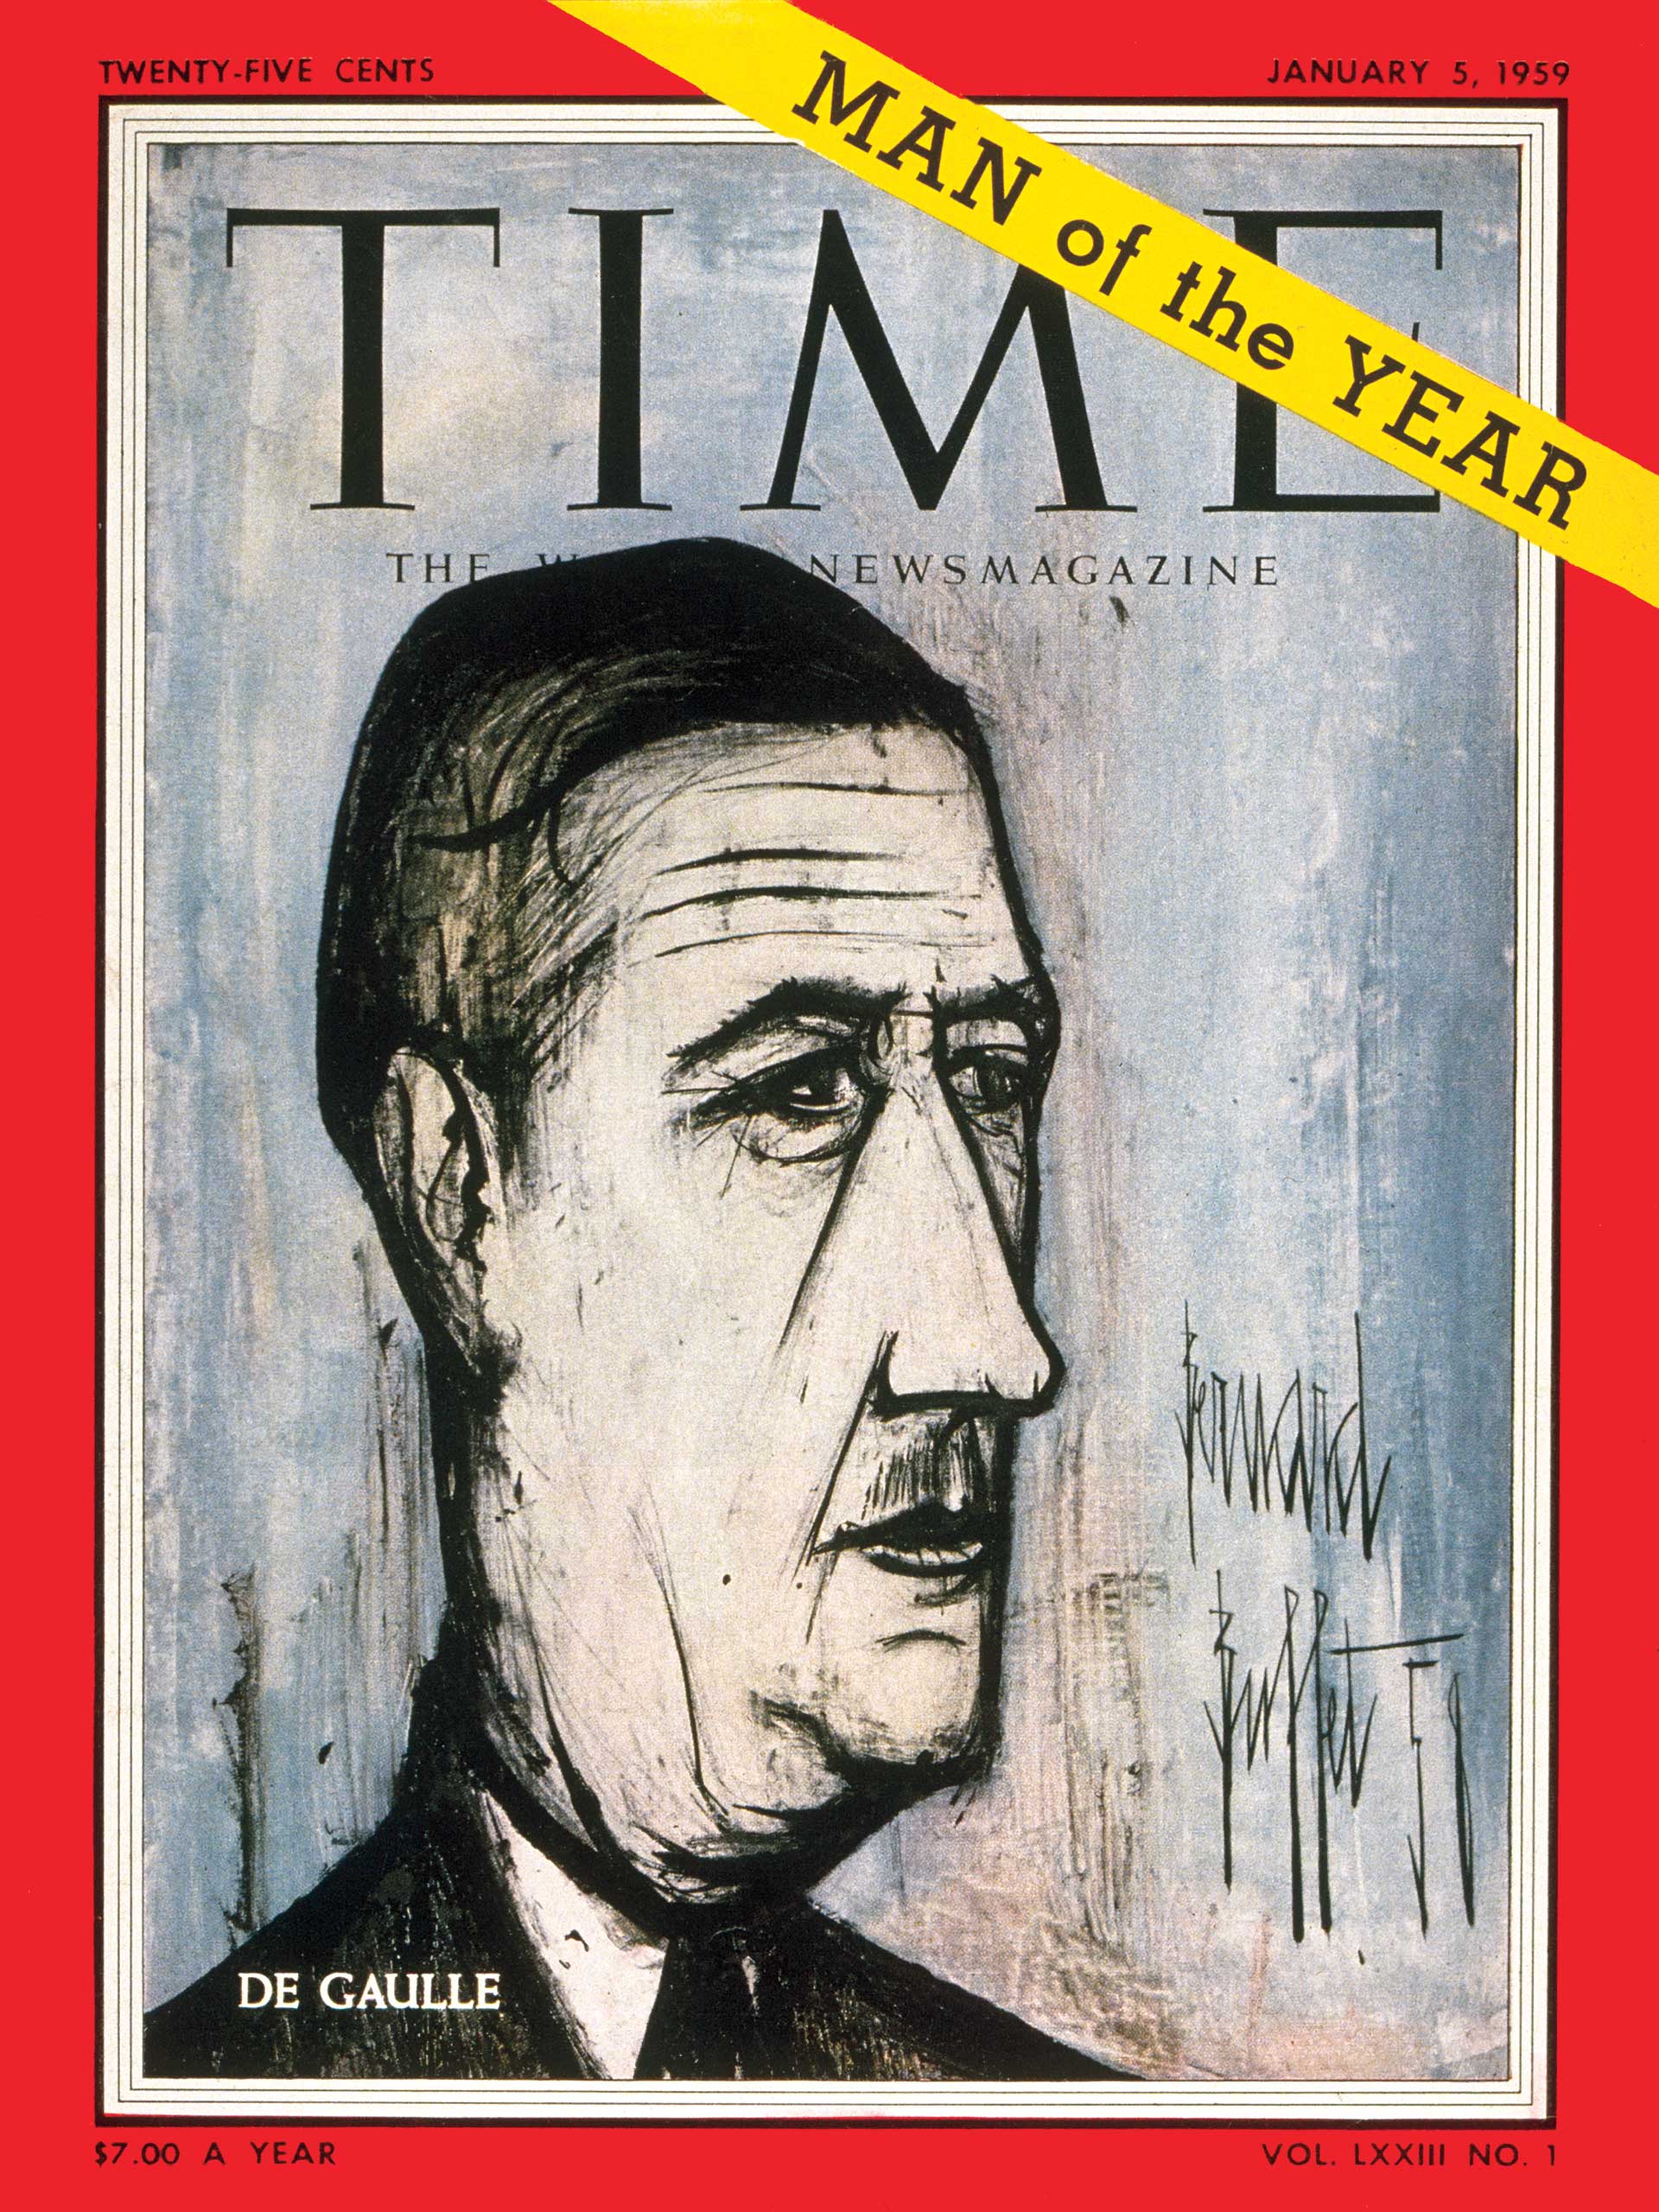 1958: Charles de Gaulle